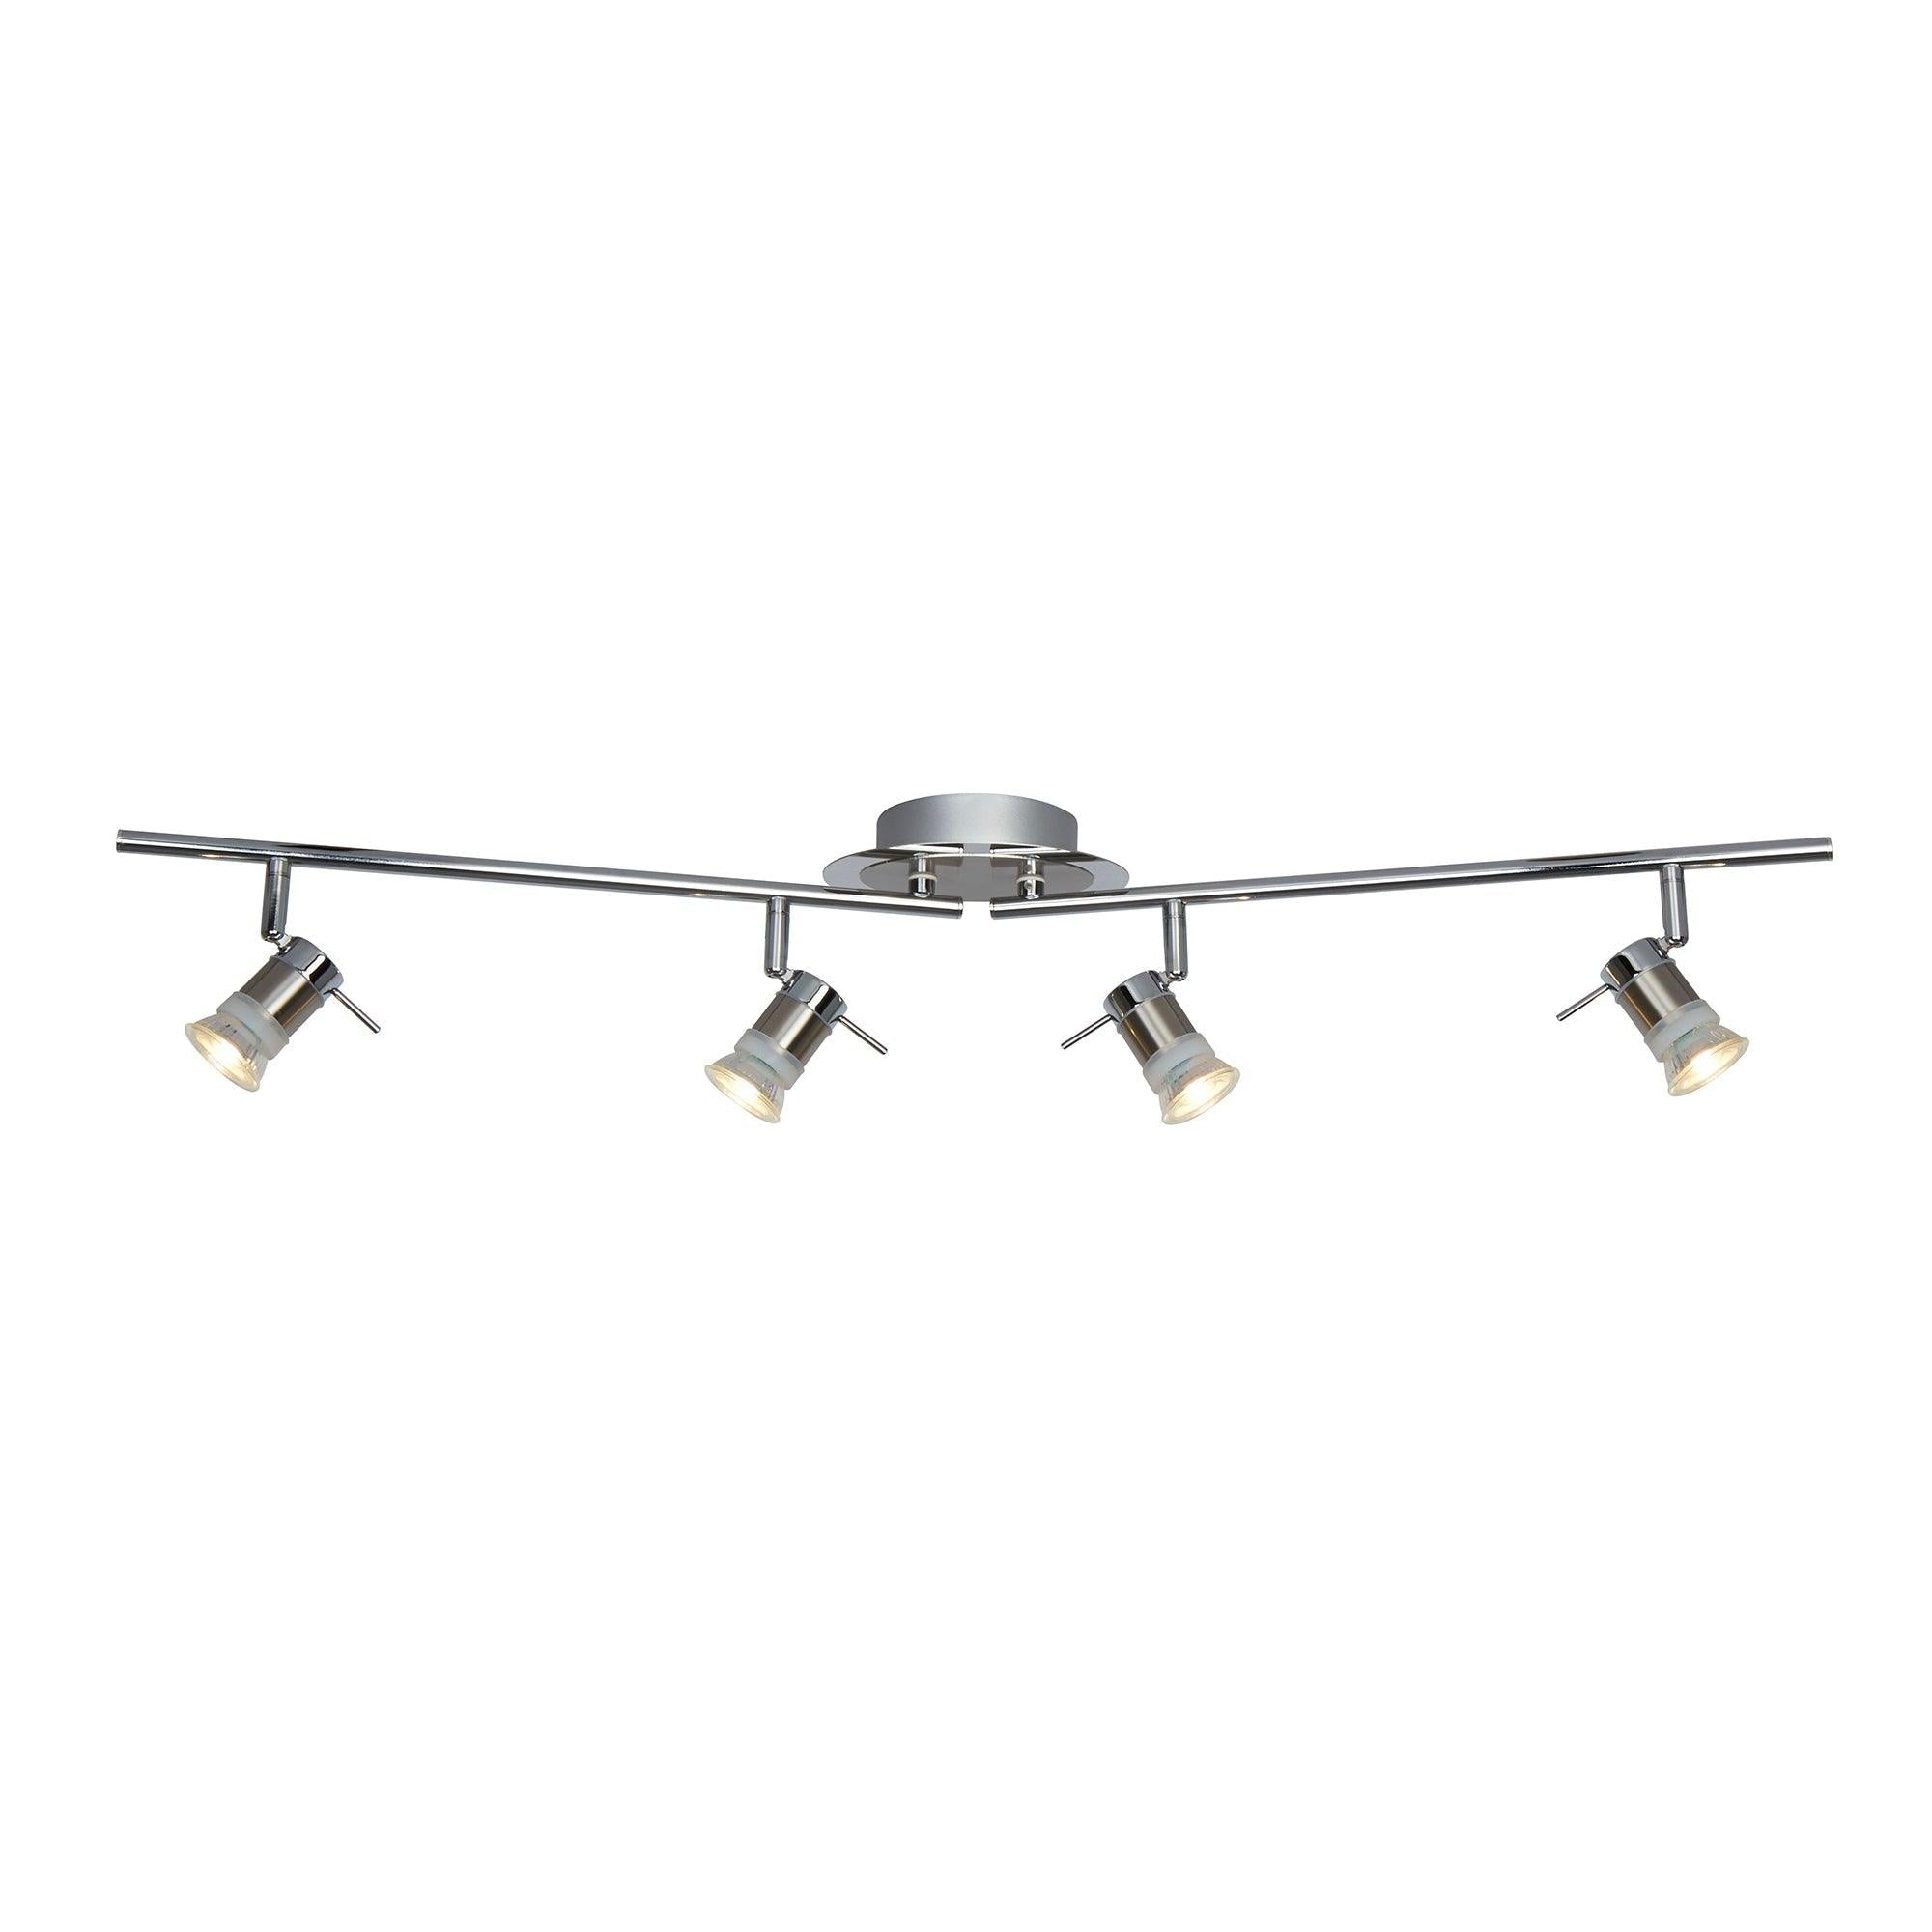 Aries Ip44 Chrome & Satin Silver 4 Light Adjustable Bar Spotlight - Peter Murphy Lighting & Electrical Ltd